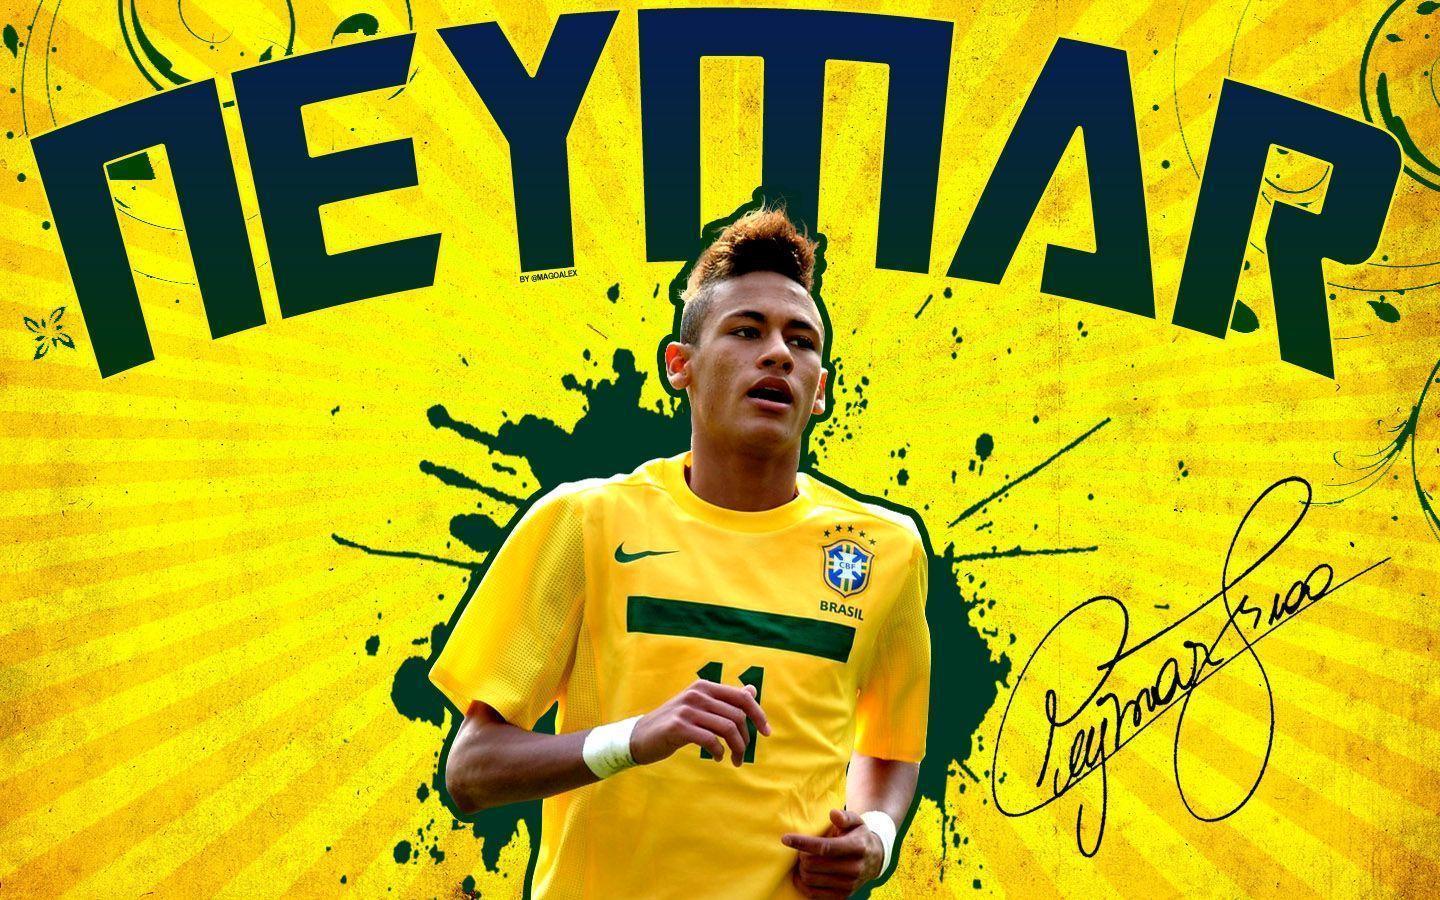 New Blog Pics: Wallpaper Neymar 2013